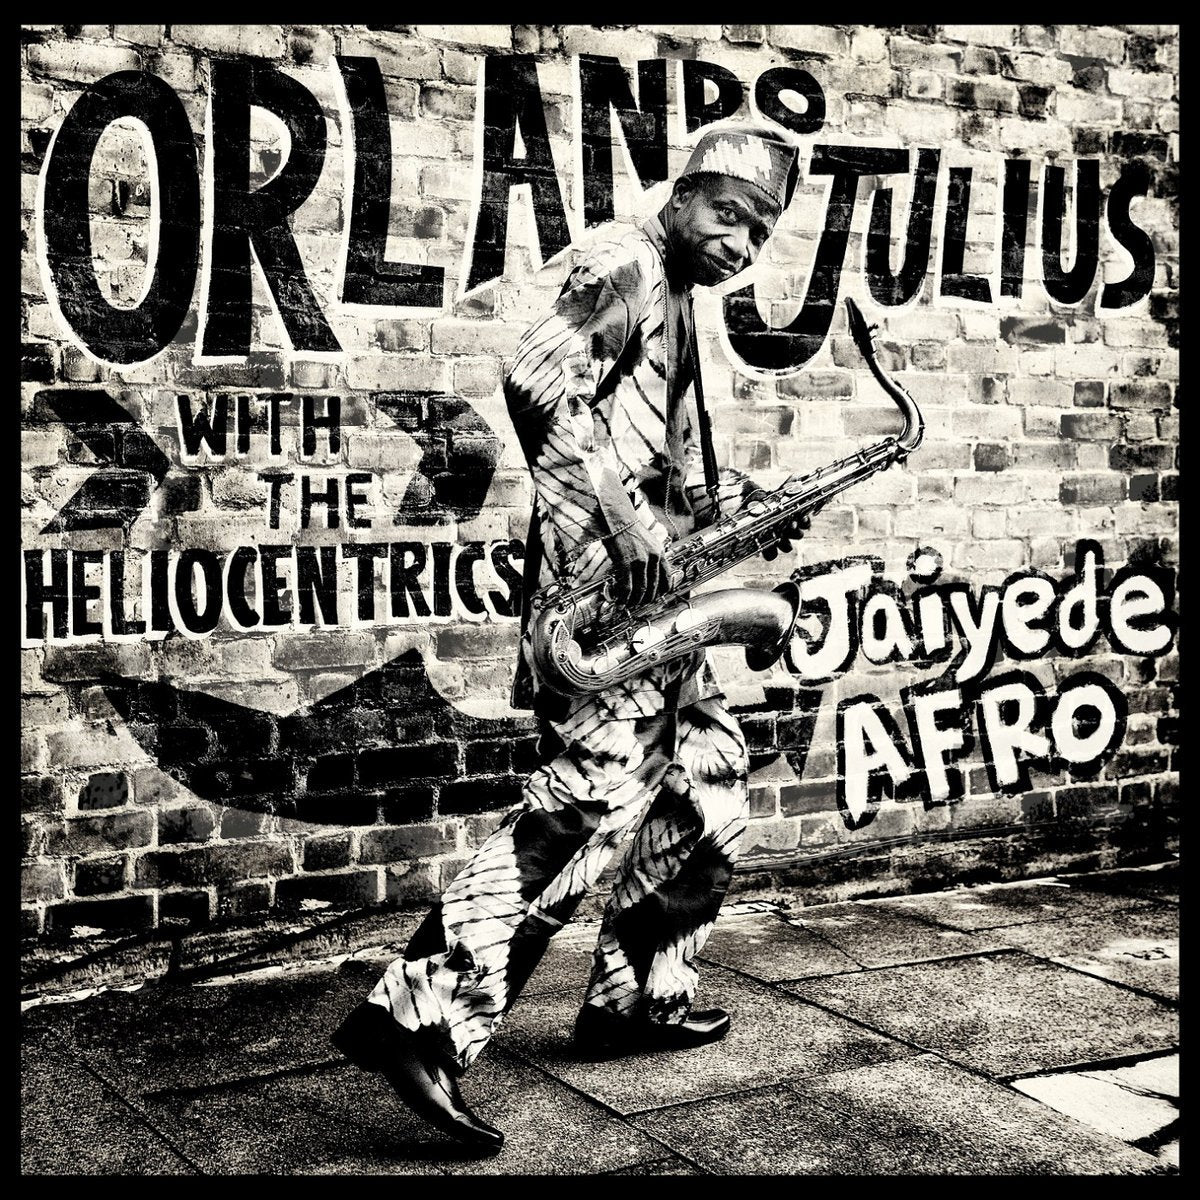 Julius, Orlando & The Heliocentrics "Jaiyede Afro" [Clear Vinyl]